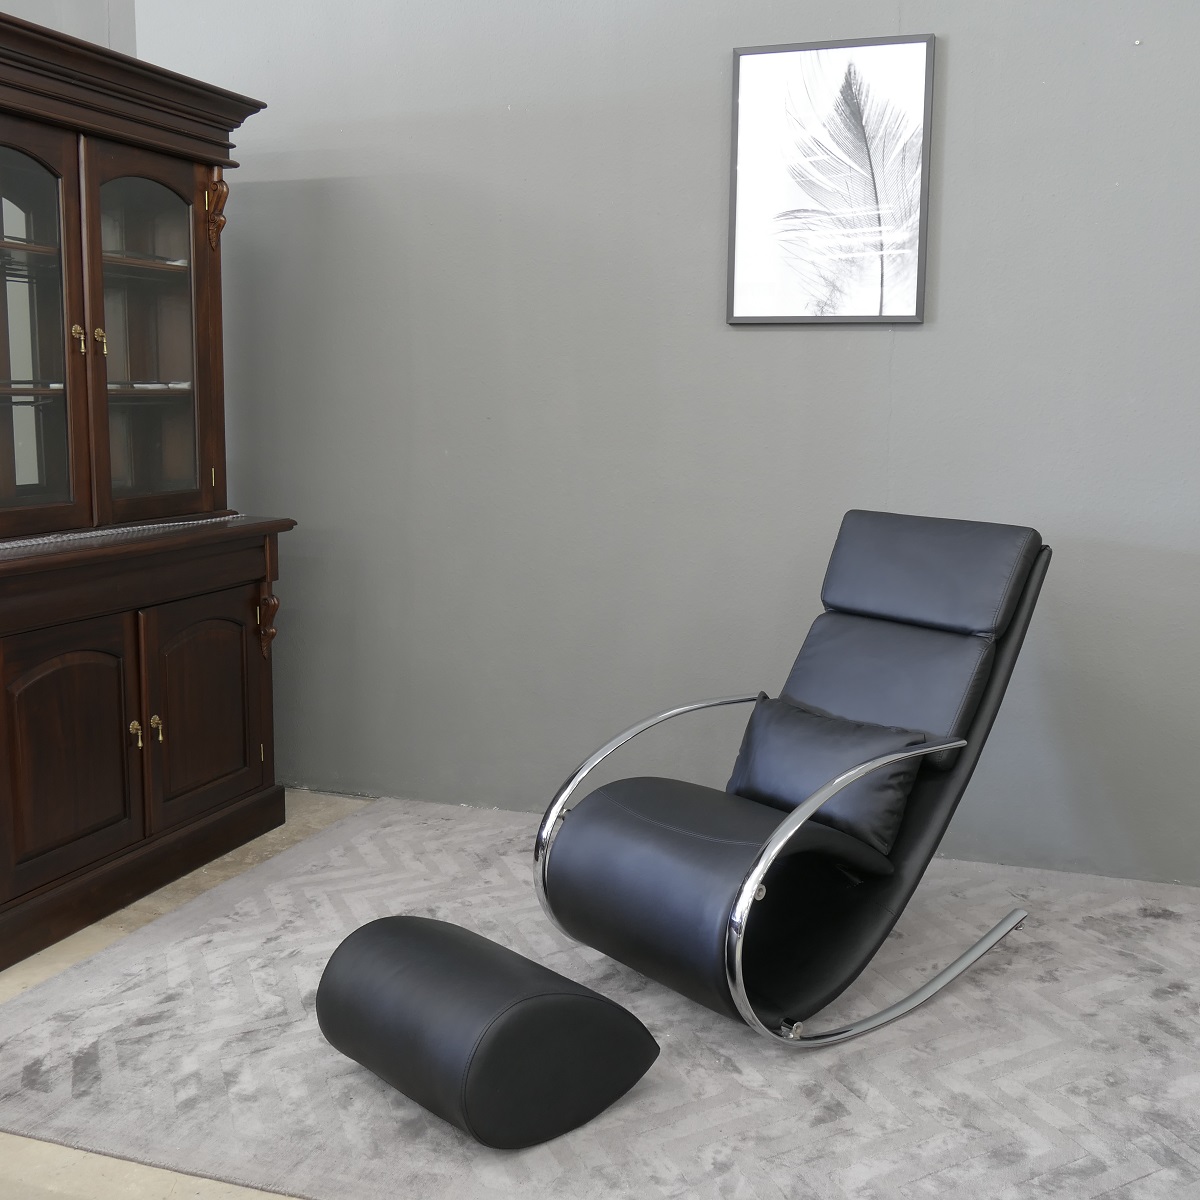 Schaukelstuhl Relaxliege Lounge Chair New Design Farbe: black